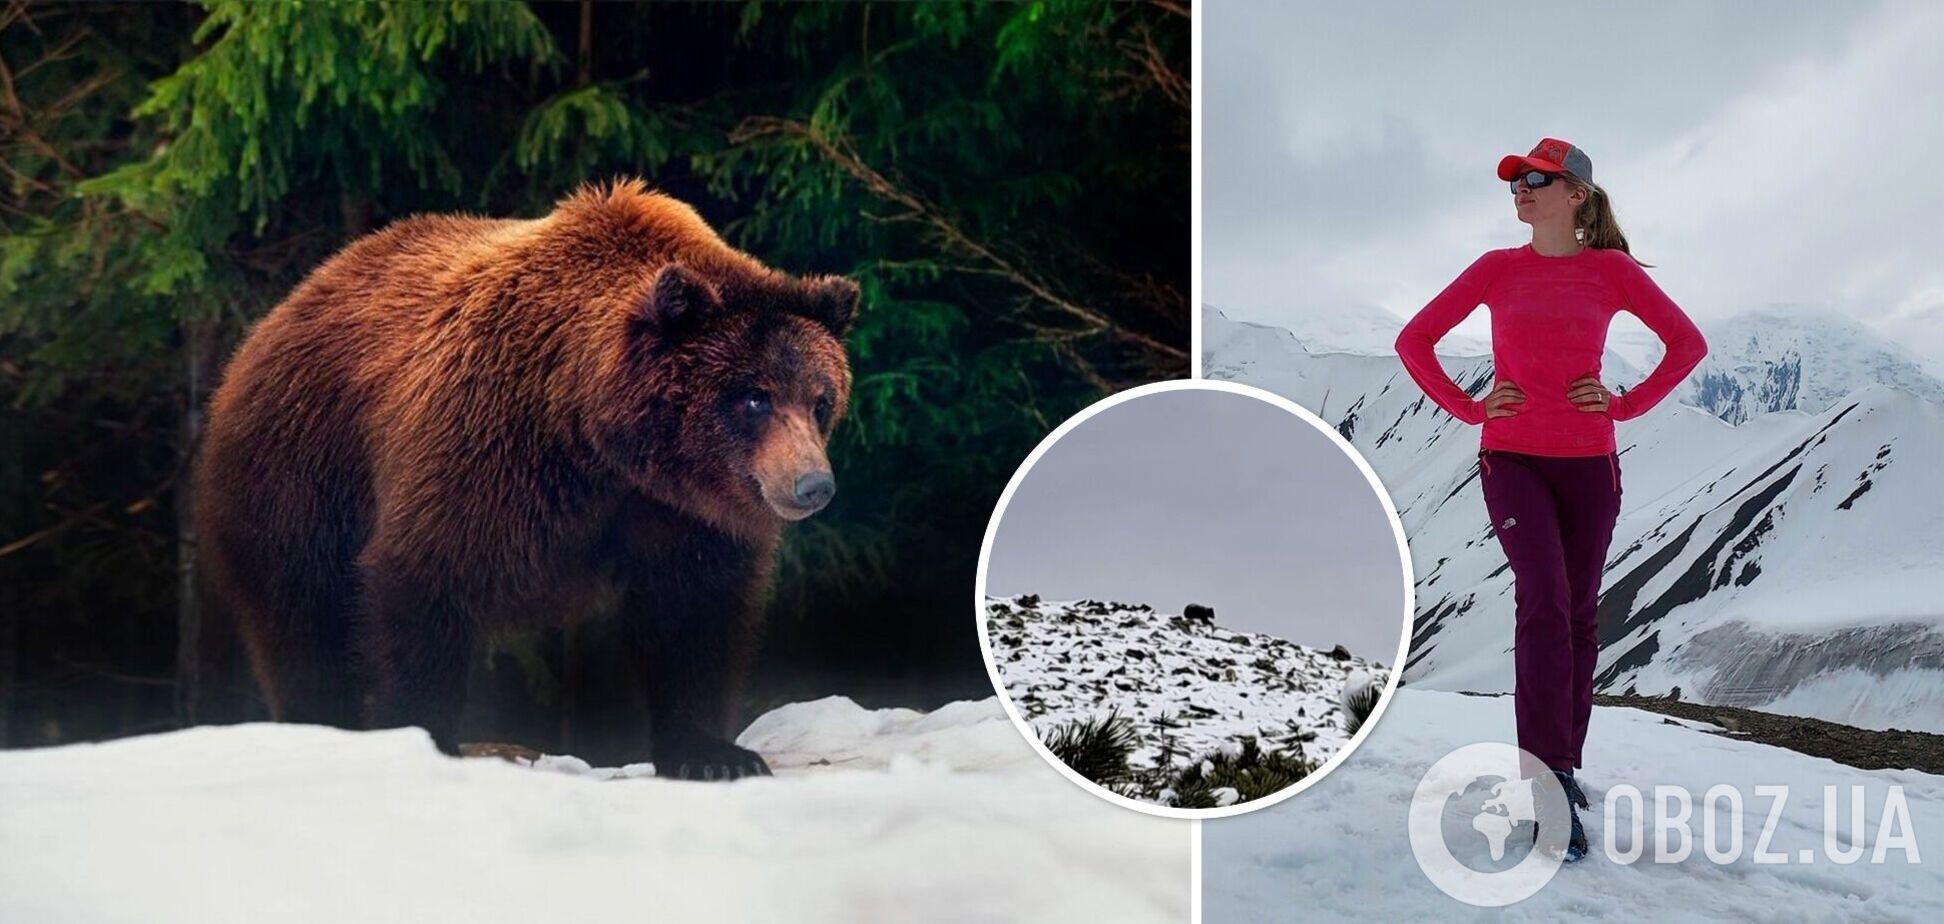 В Карпатах одинокая туристка натолкнулась на огромного медведя. Видео встречи